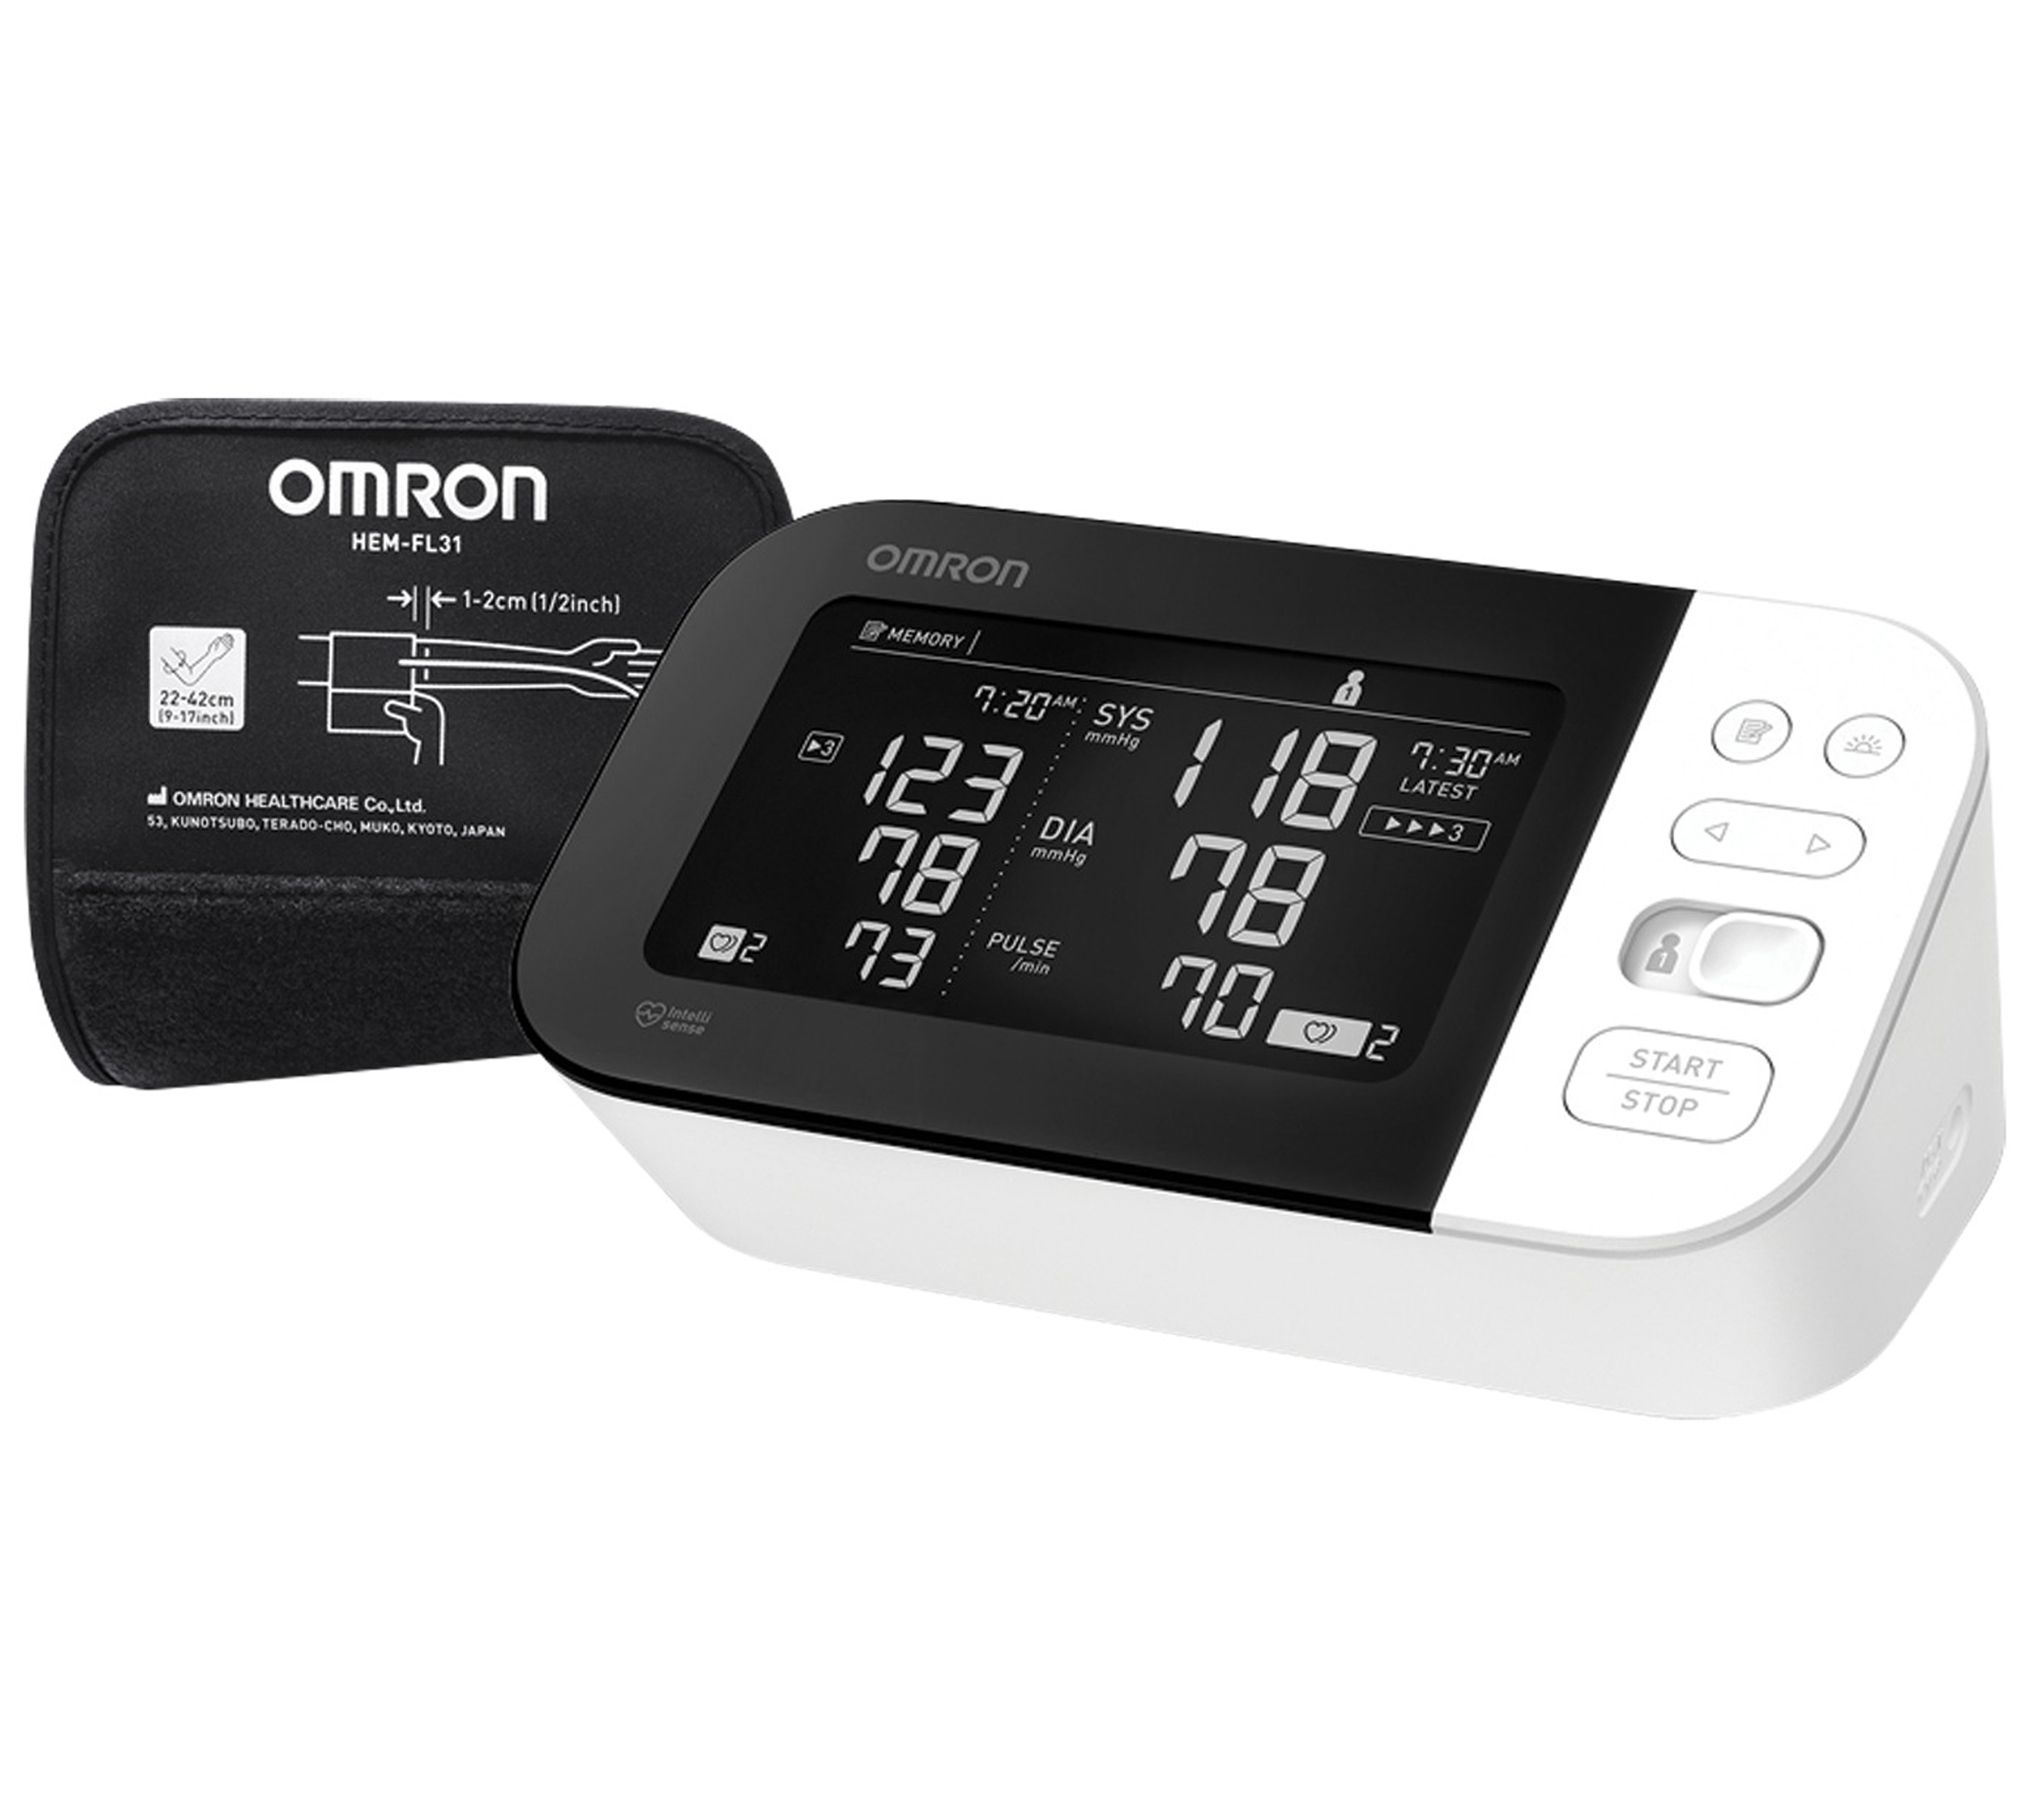 OMRON 5 Series Wireless Upper Arm Blood Pressure Monitor